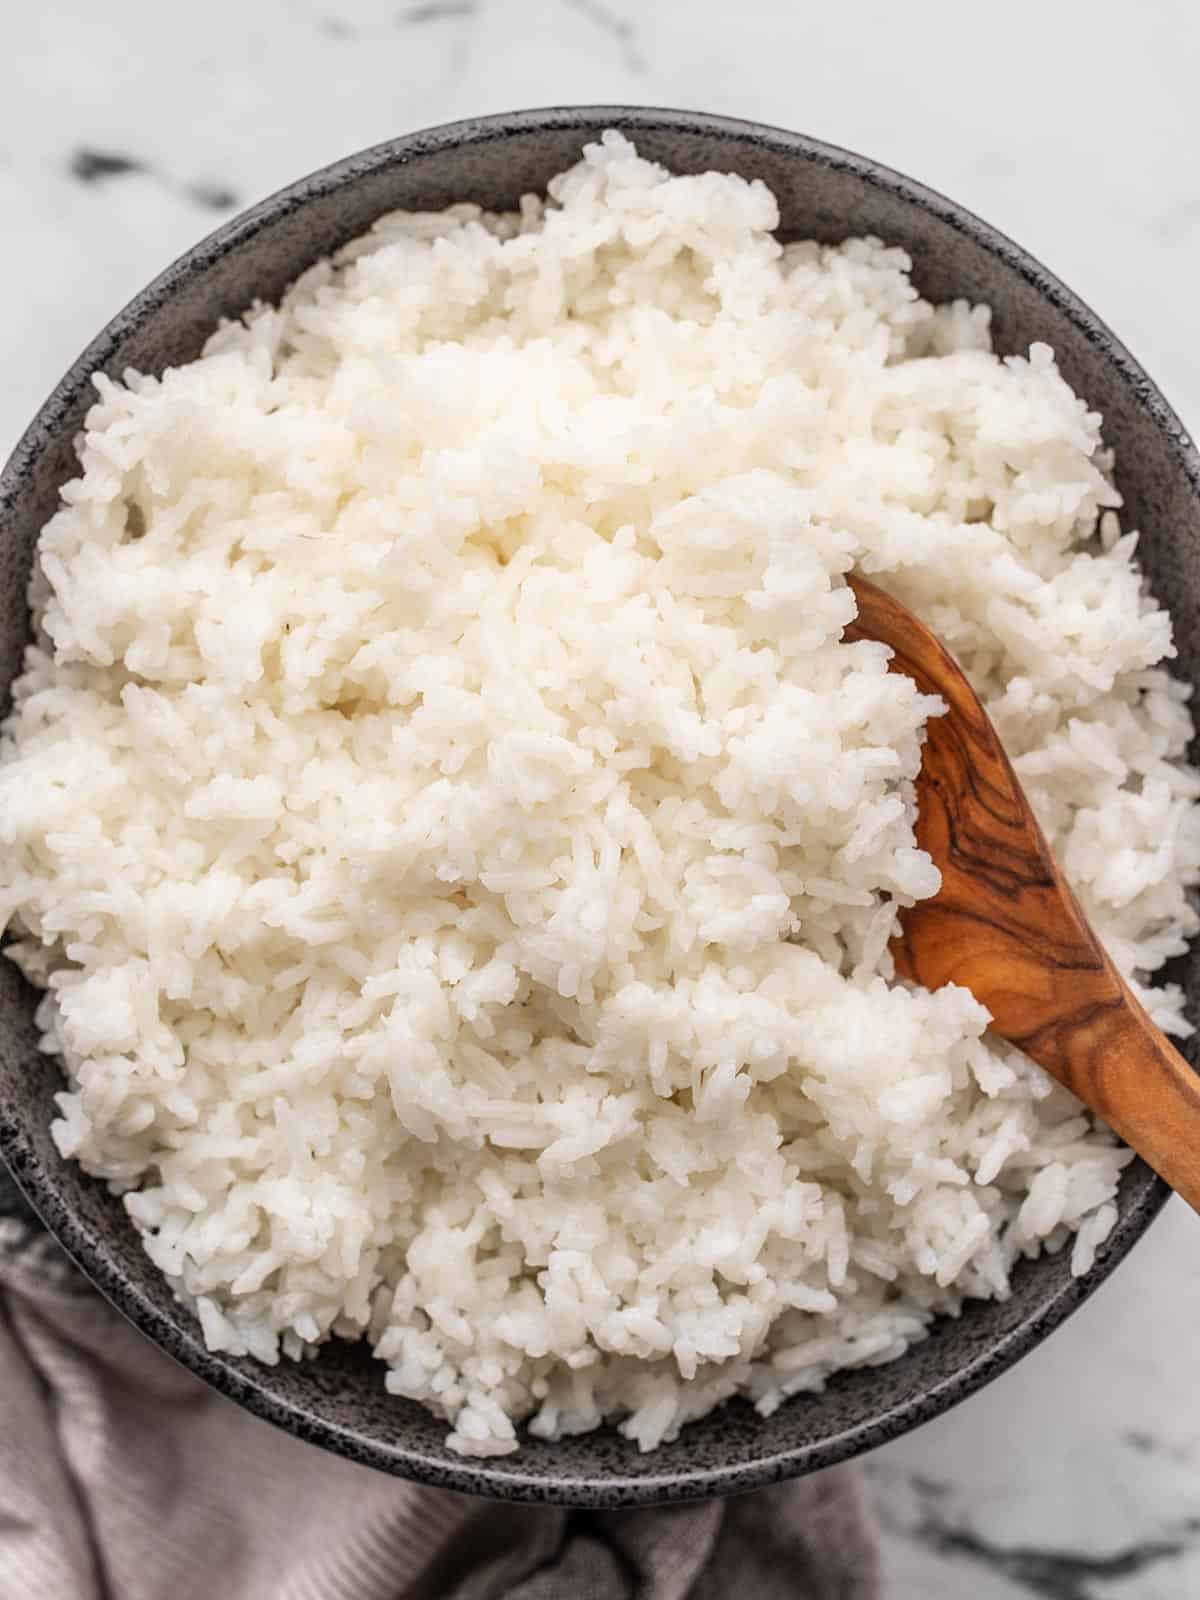 https://www.budgetbytes.com/wp-content/uploads/2022/04/How-to-Cook-Rice-V2.jpg